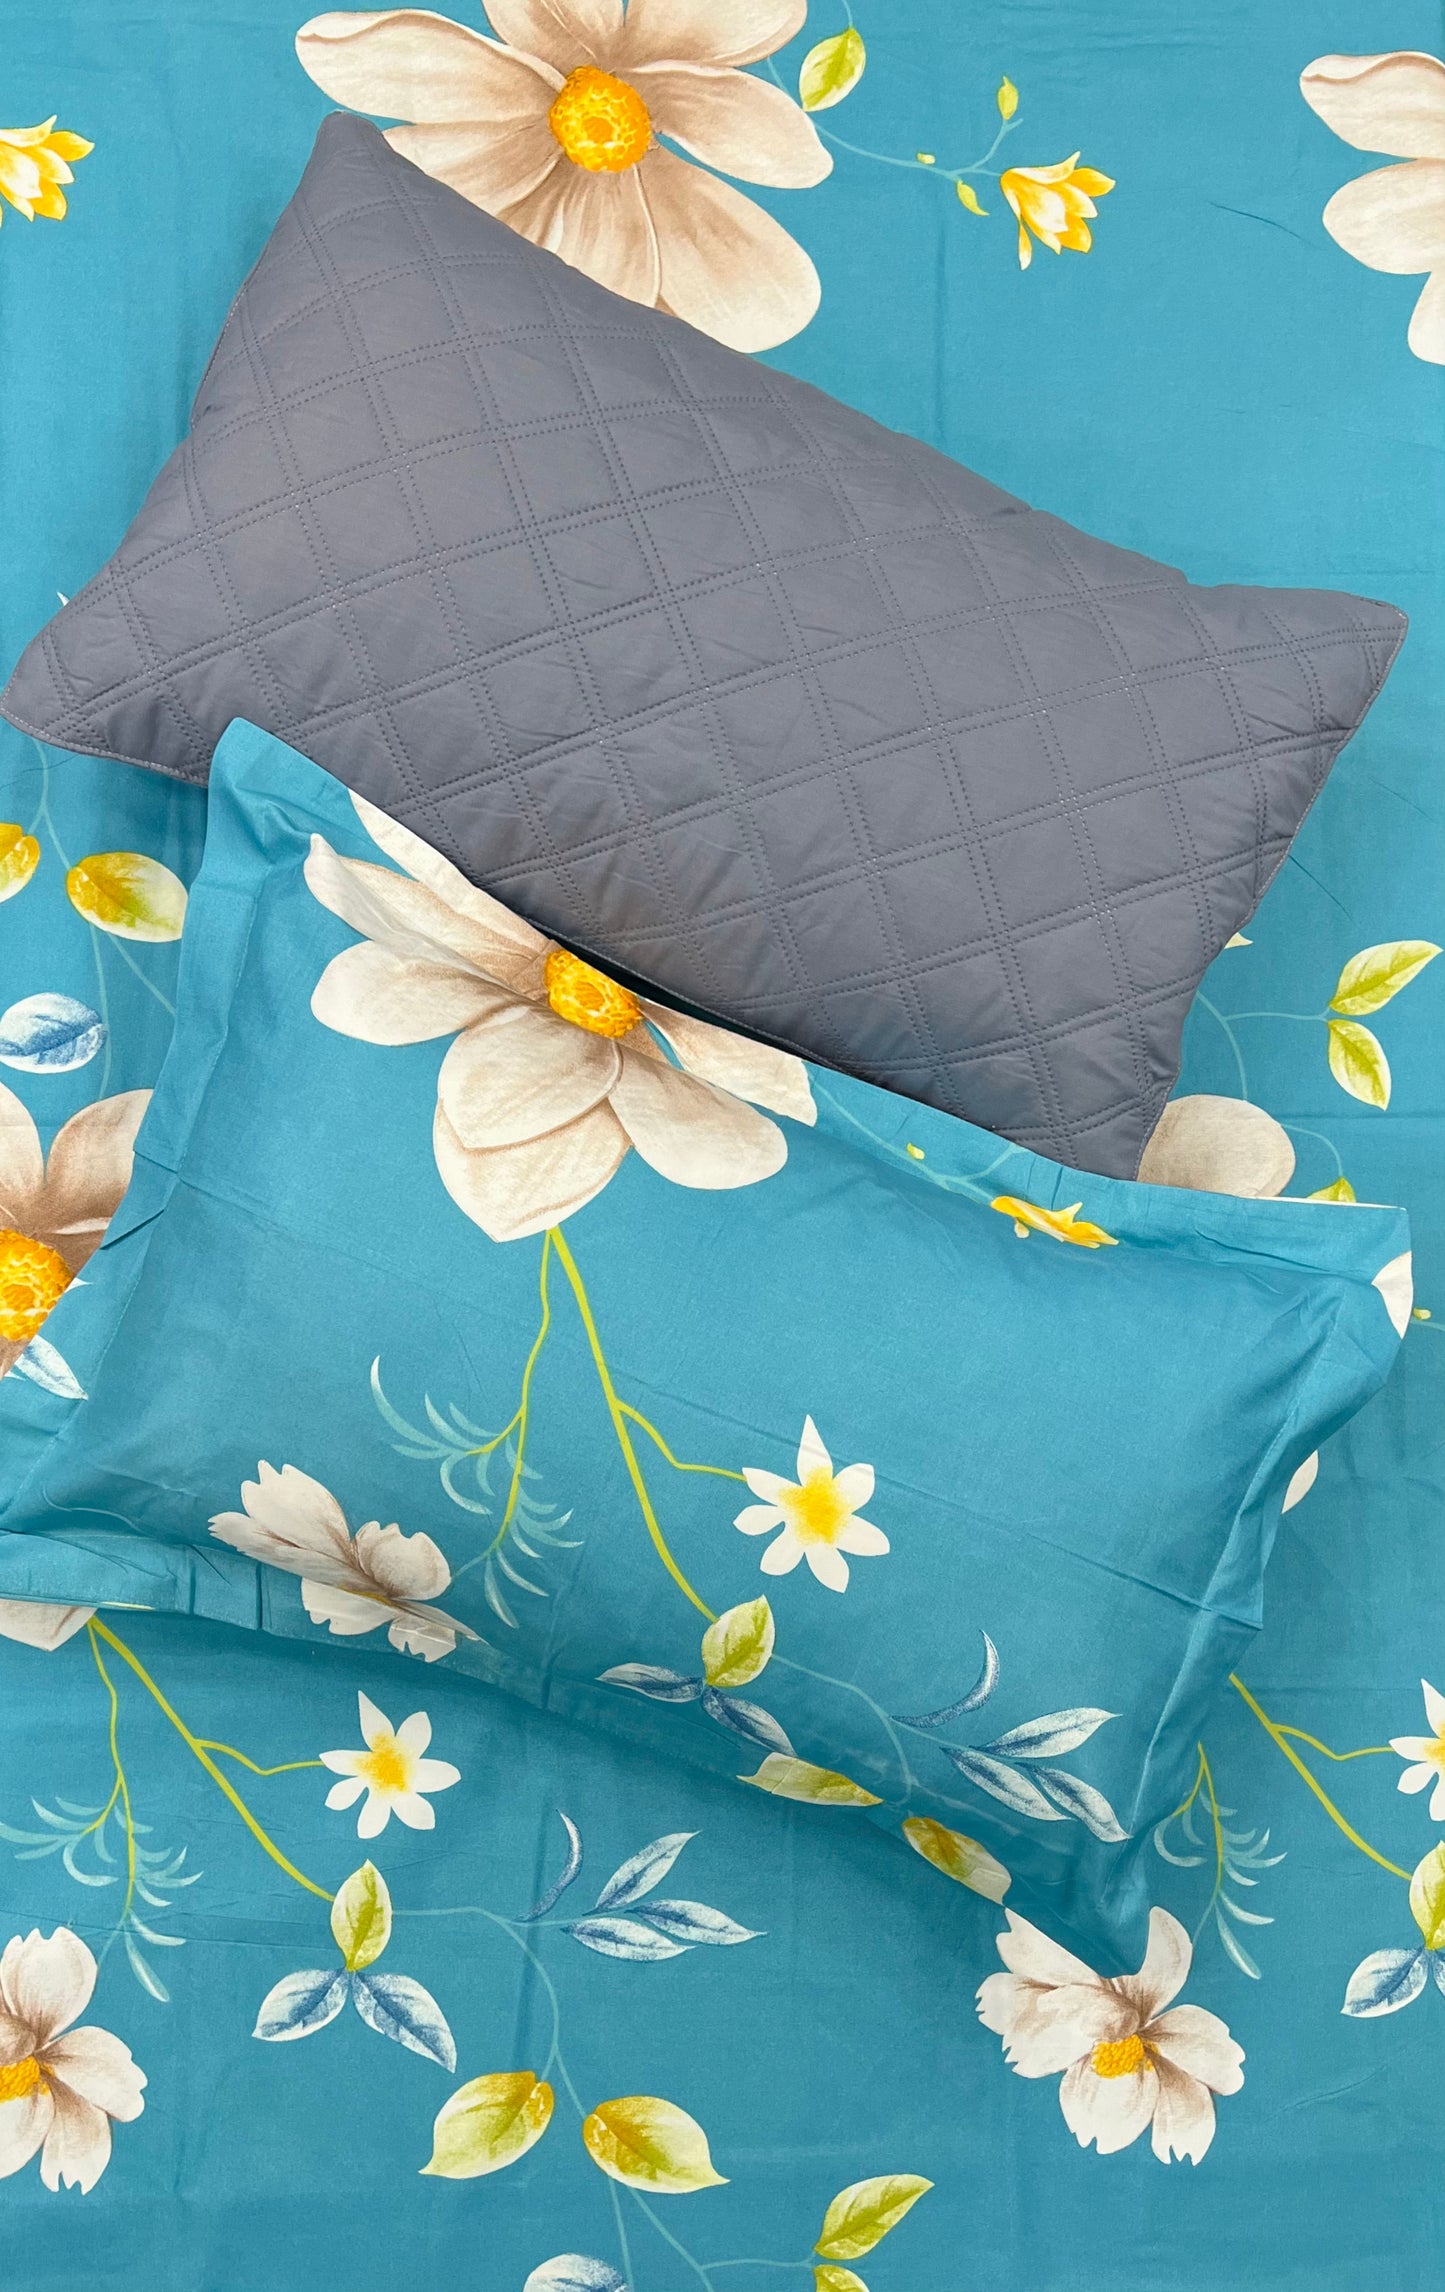 CASTELLO KING Bedsheet (4 Pillow covers)